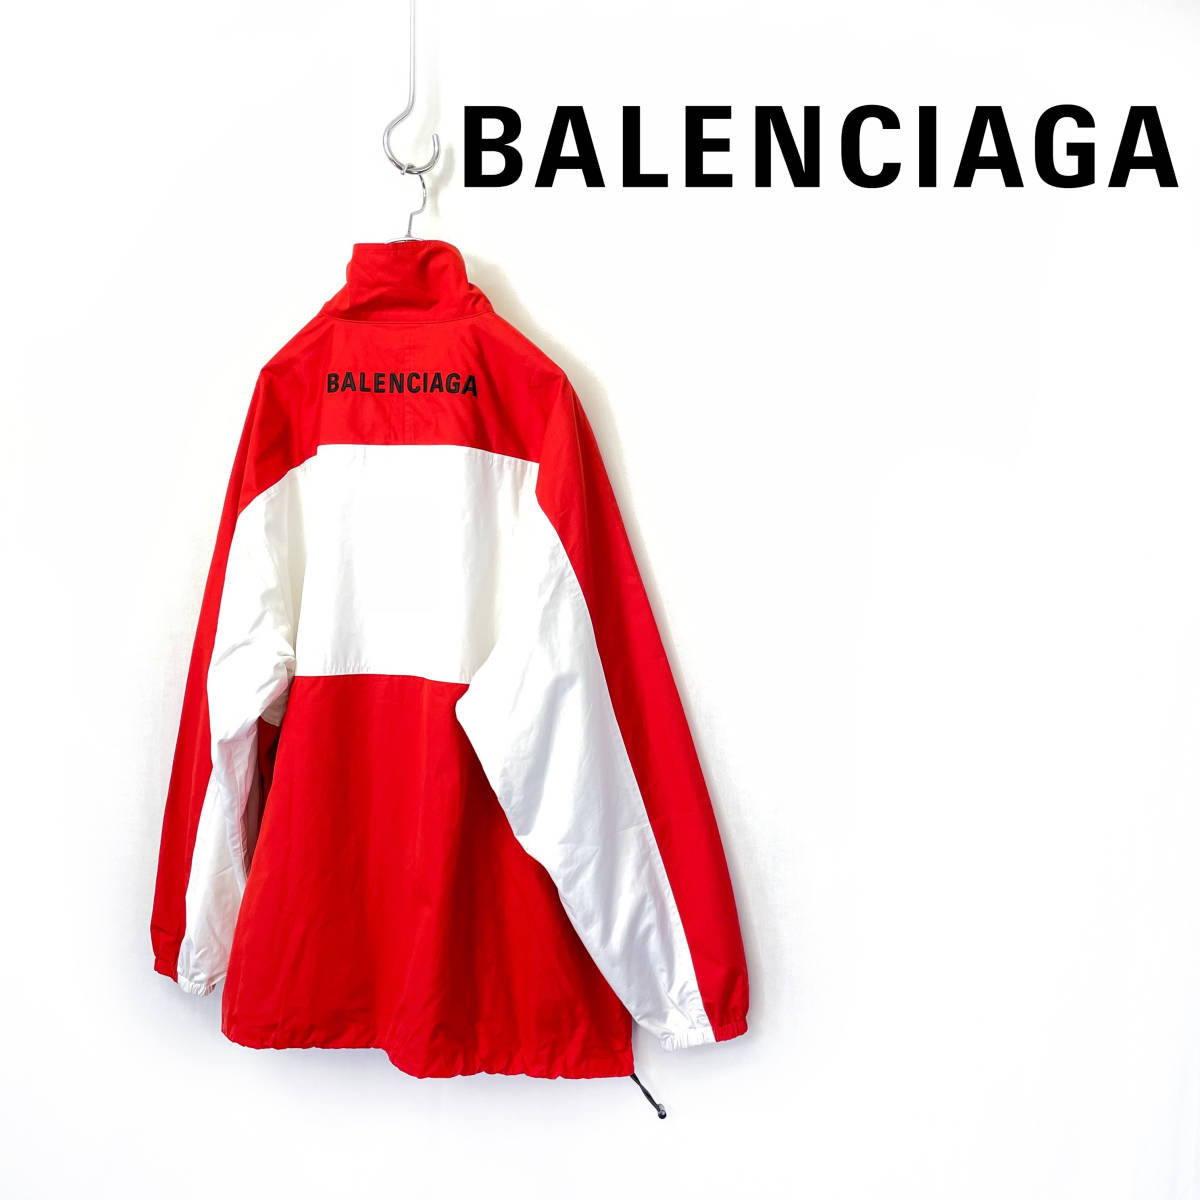 2019AW BALENCIAGA TRACKSUIT POPLIN SHIRT JACKET バレンシアガ ロゴ ナイロン ジャケット size 44 1021805